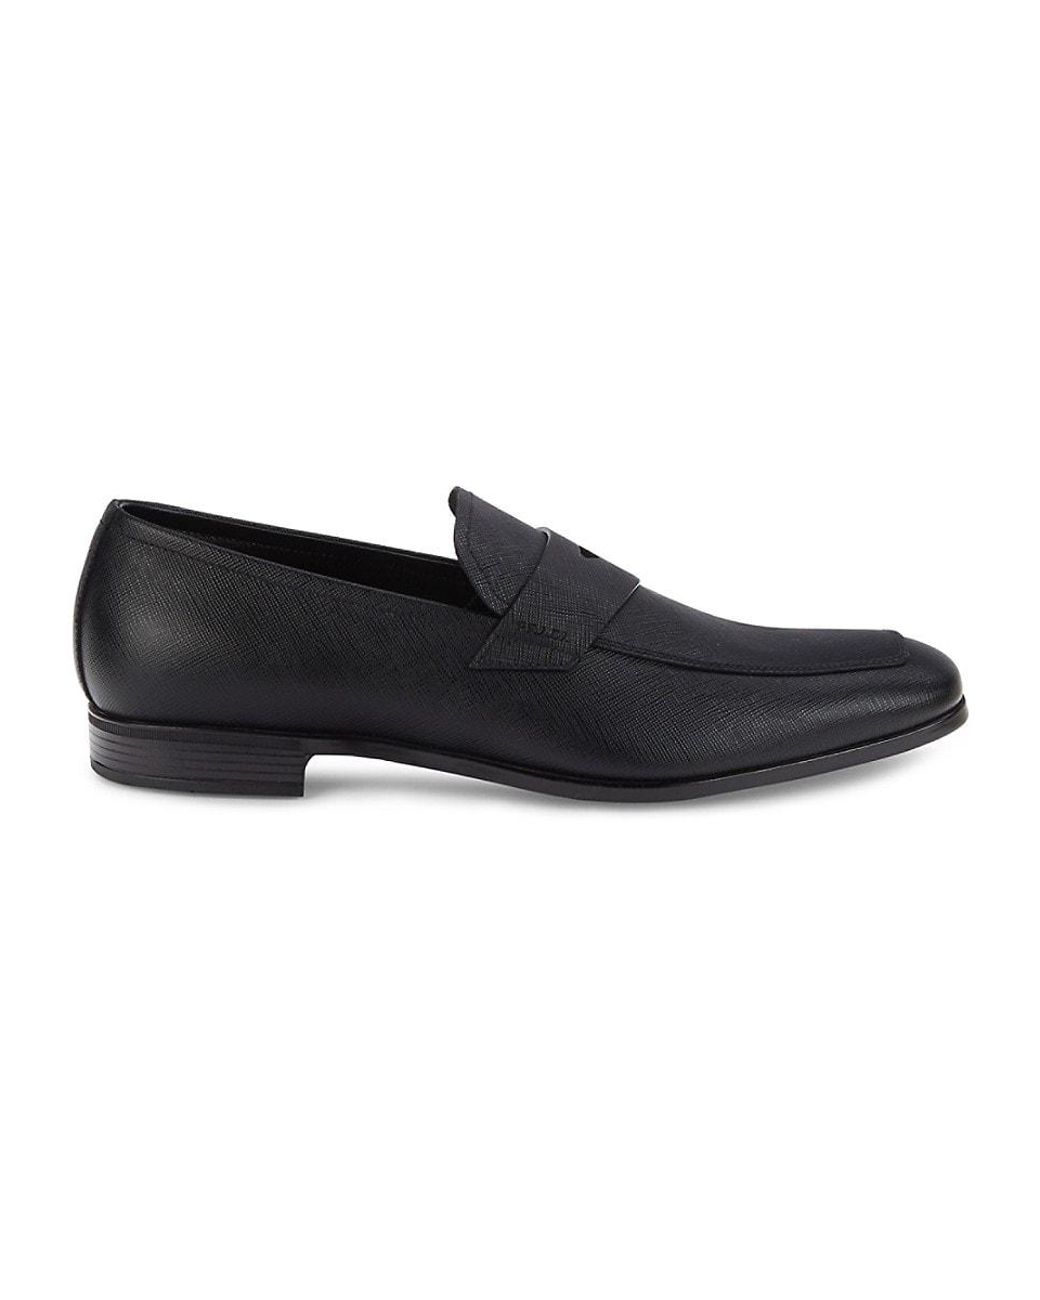 Prada Saffiano Leather Penny Loafers in Nero (Black) for Men | Lyst